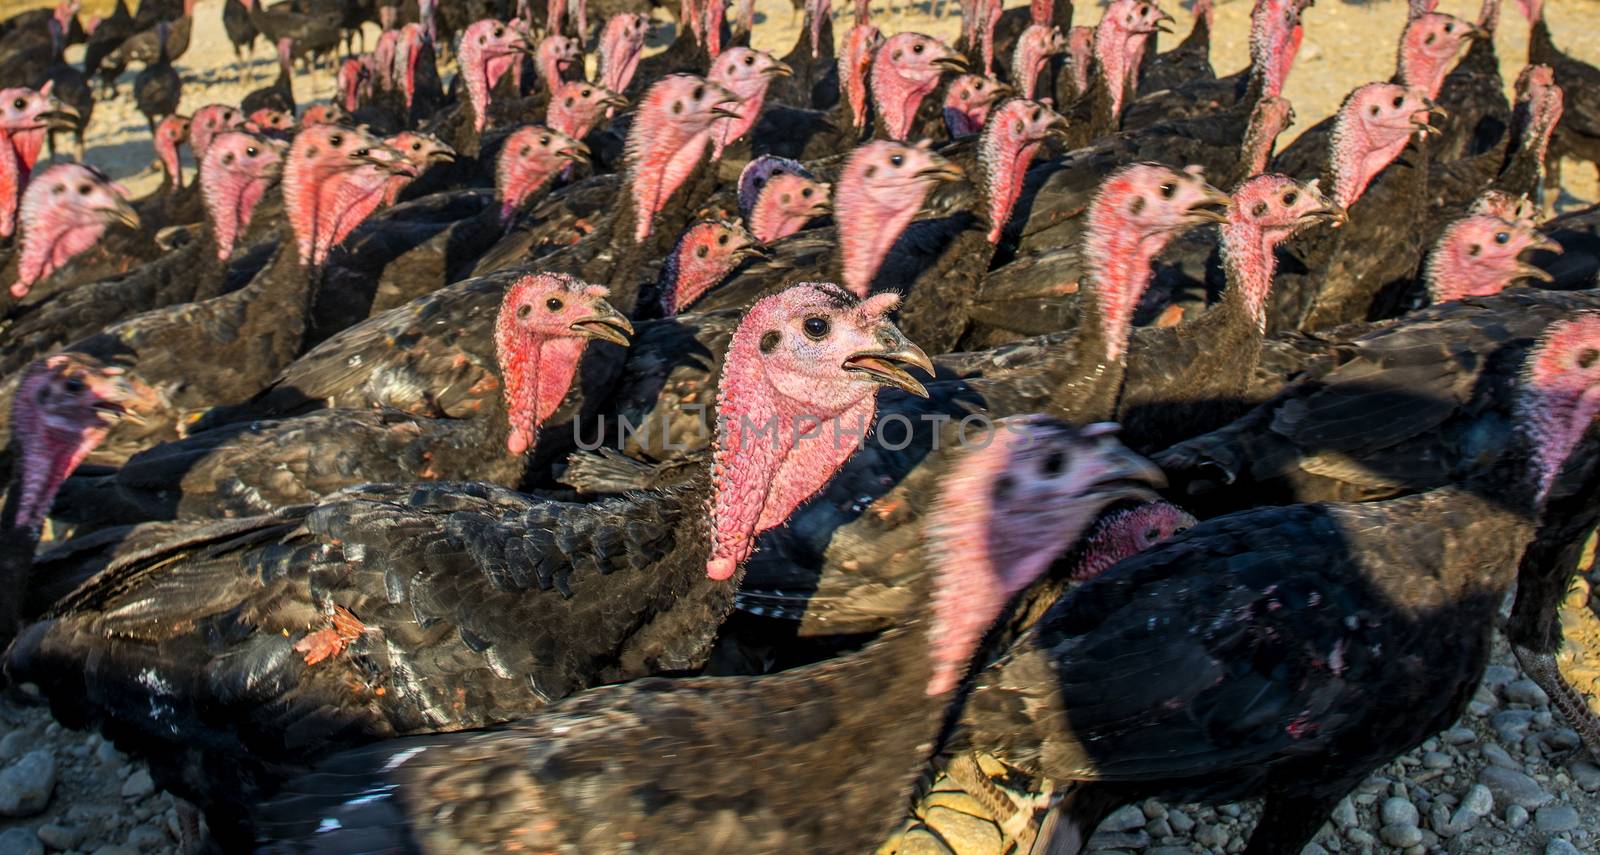 Flock of Turkeys by thisboy